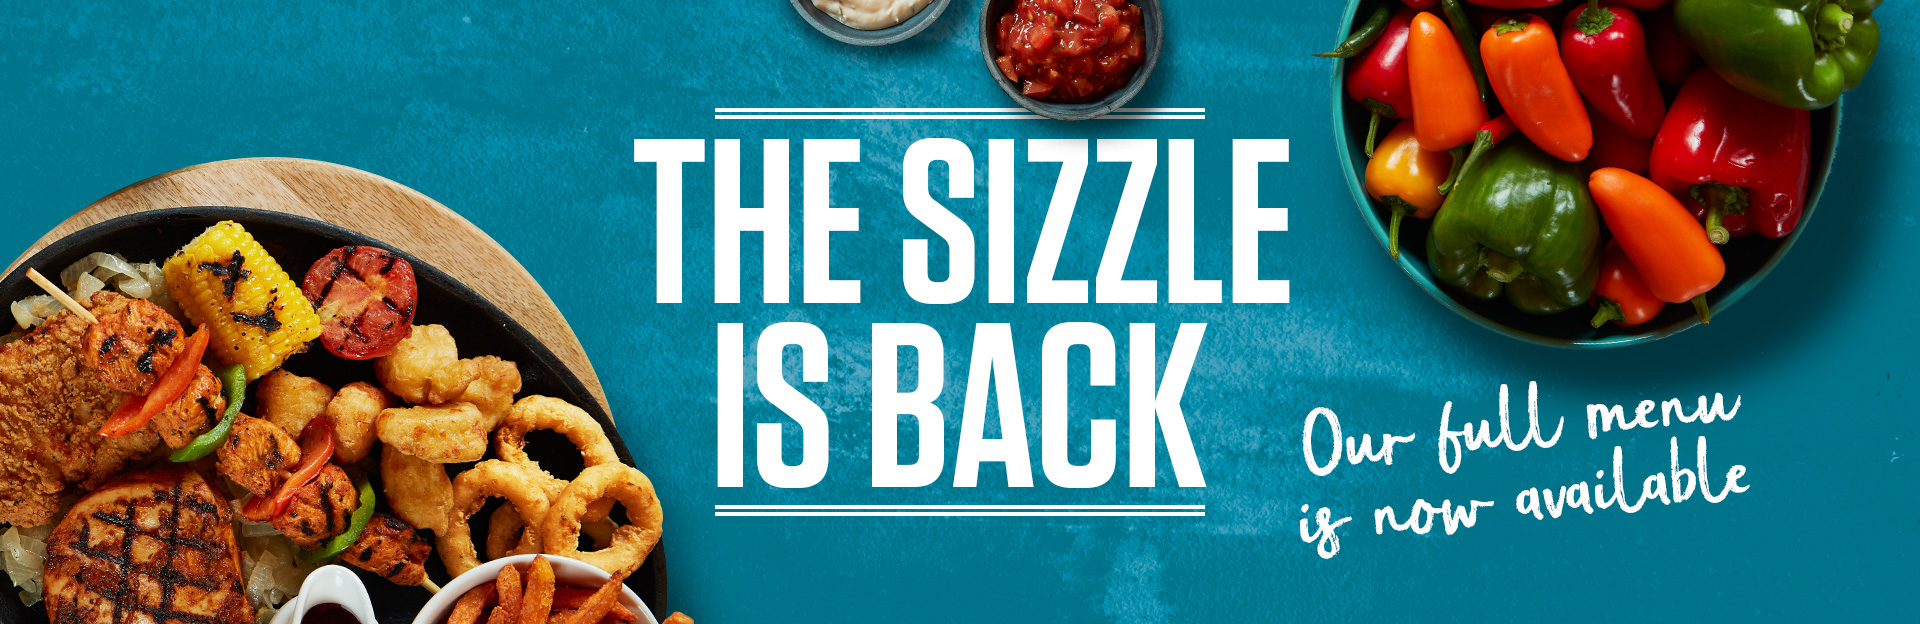 sizzling-2021-foodmenu-banner.jpg